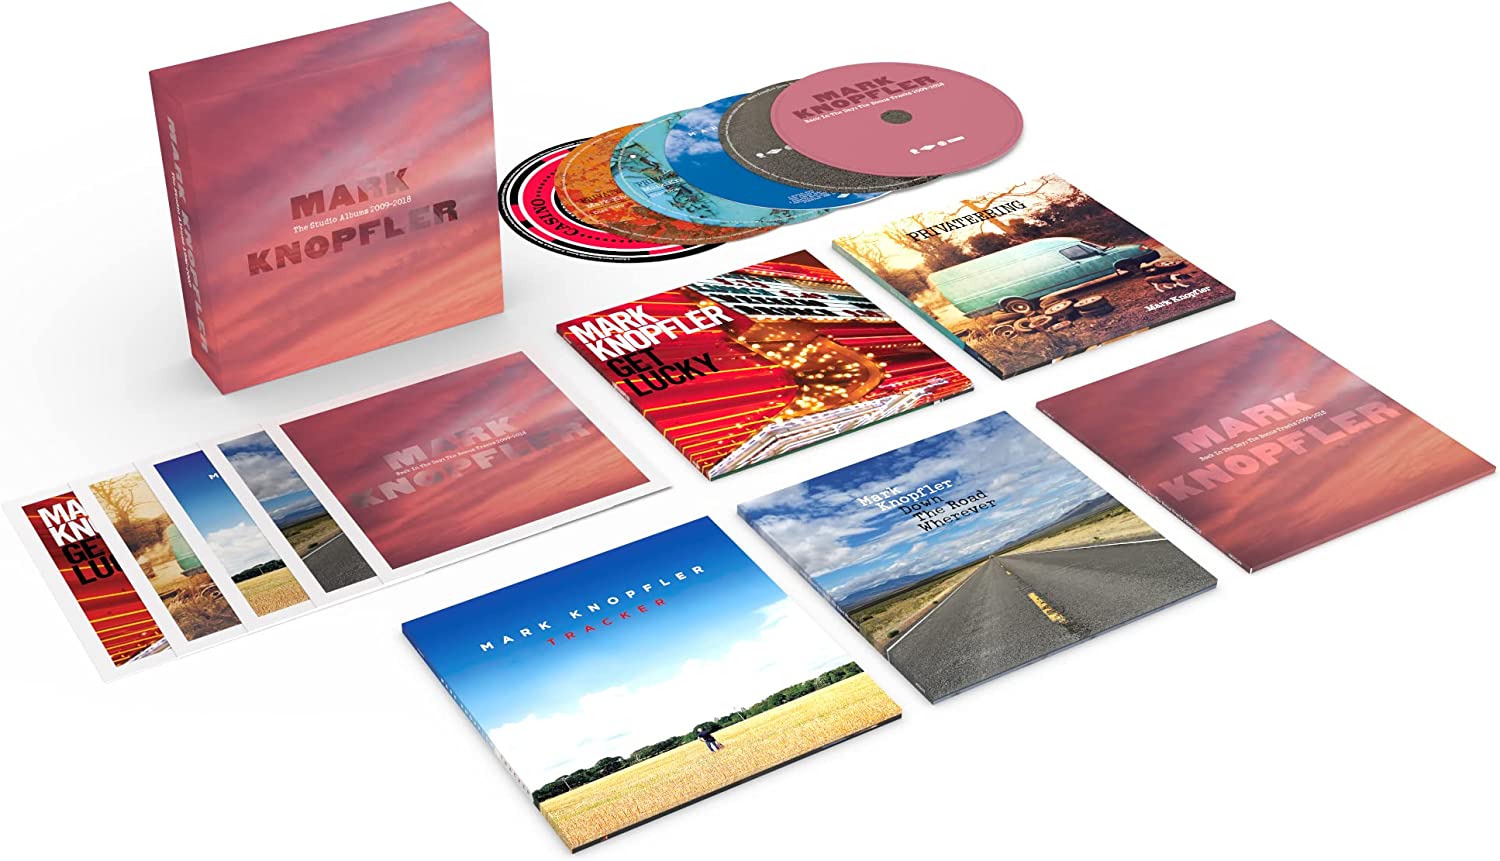 Mark Knopfler The Studio Albums 2009-2018 CD Boxset